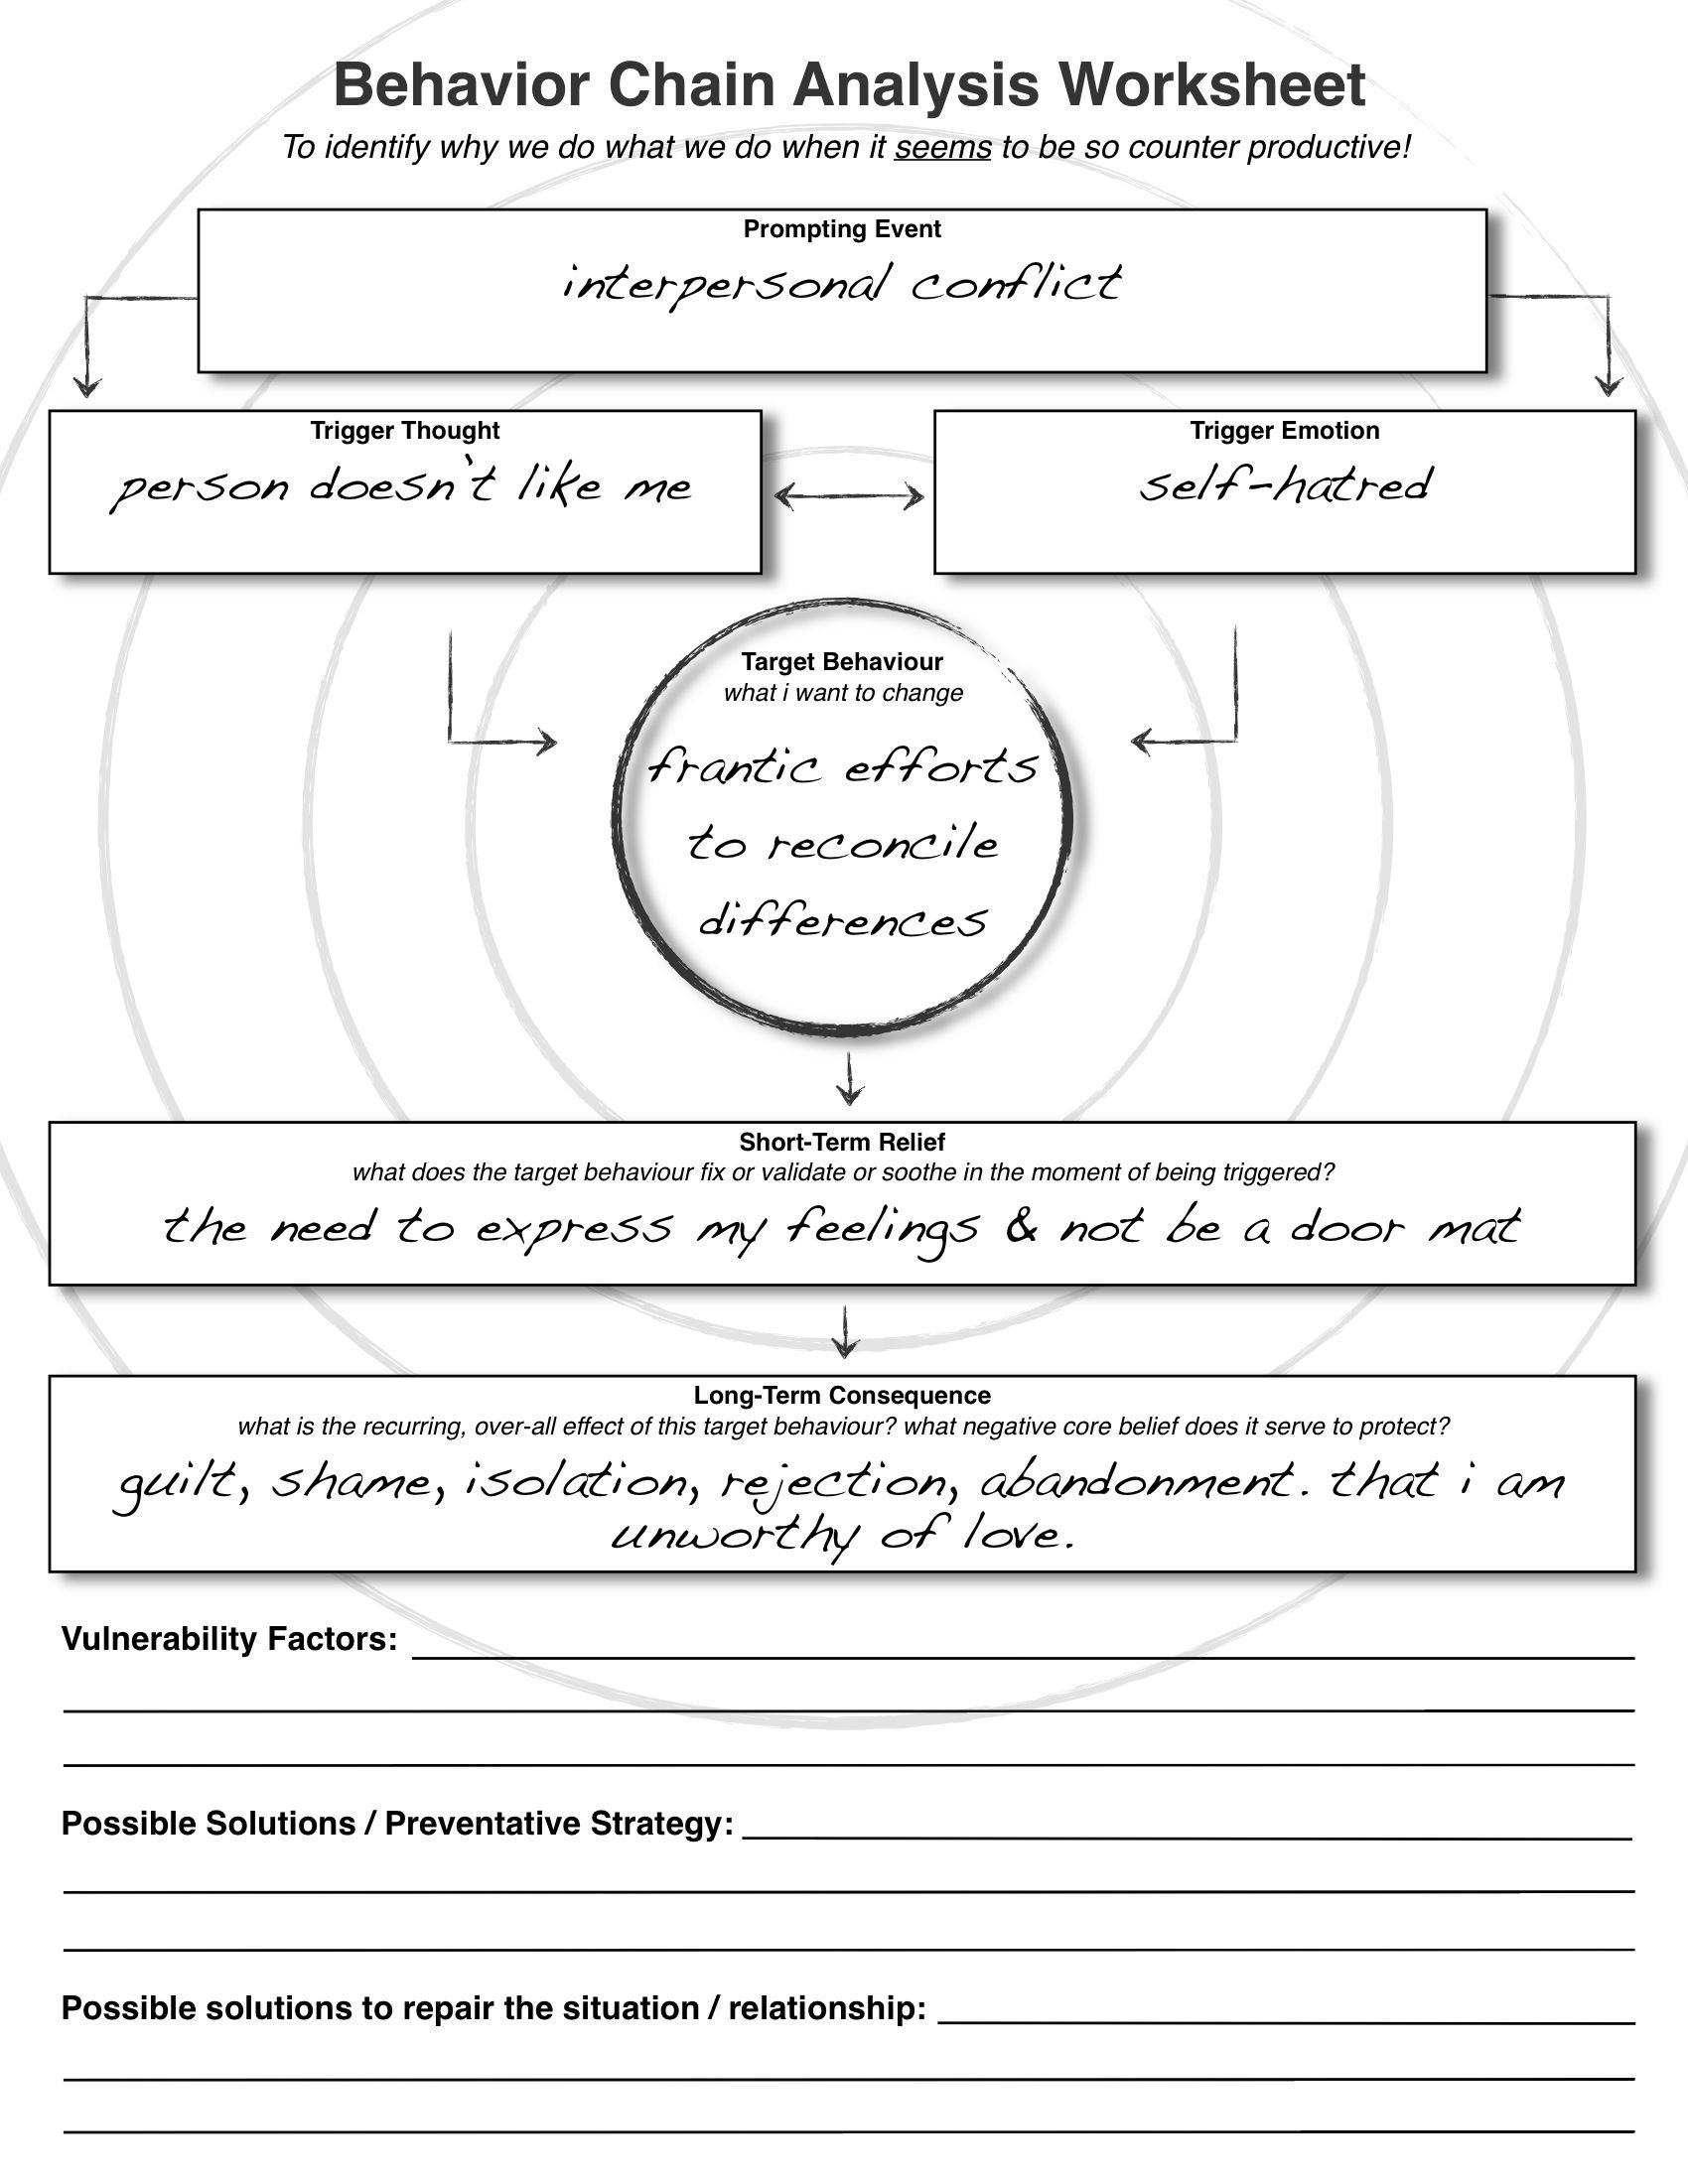 building-healthy-relationships-worksheets-db-excel